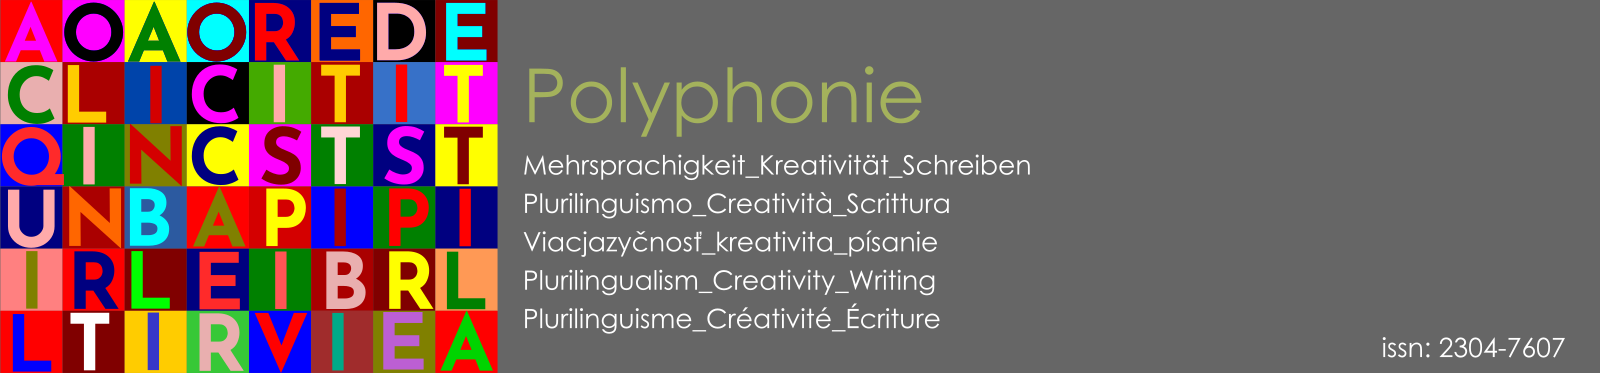 banner Polyphonie